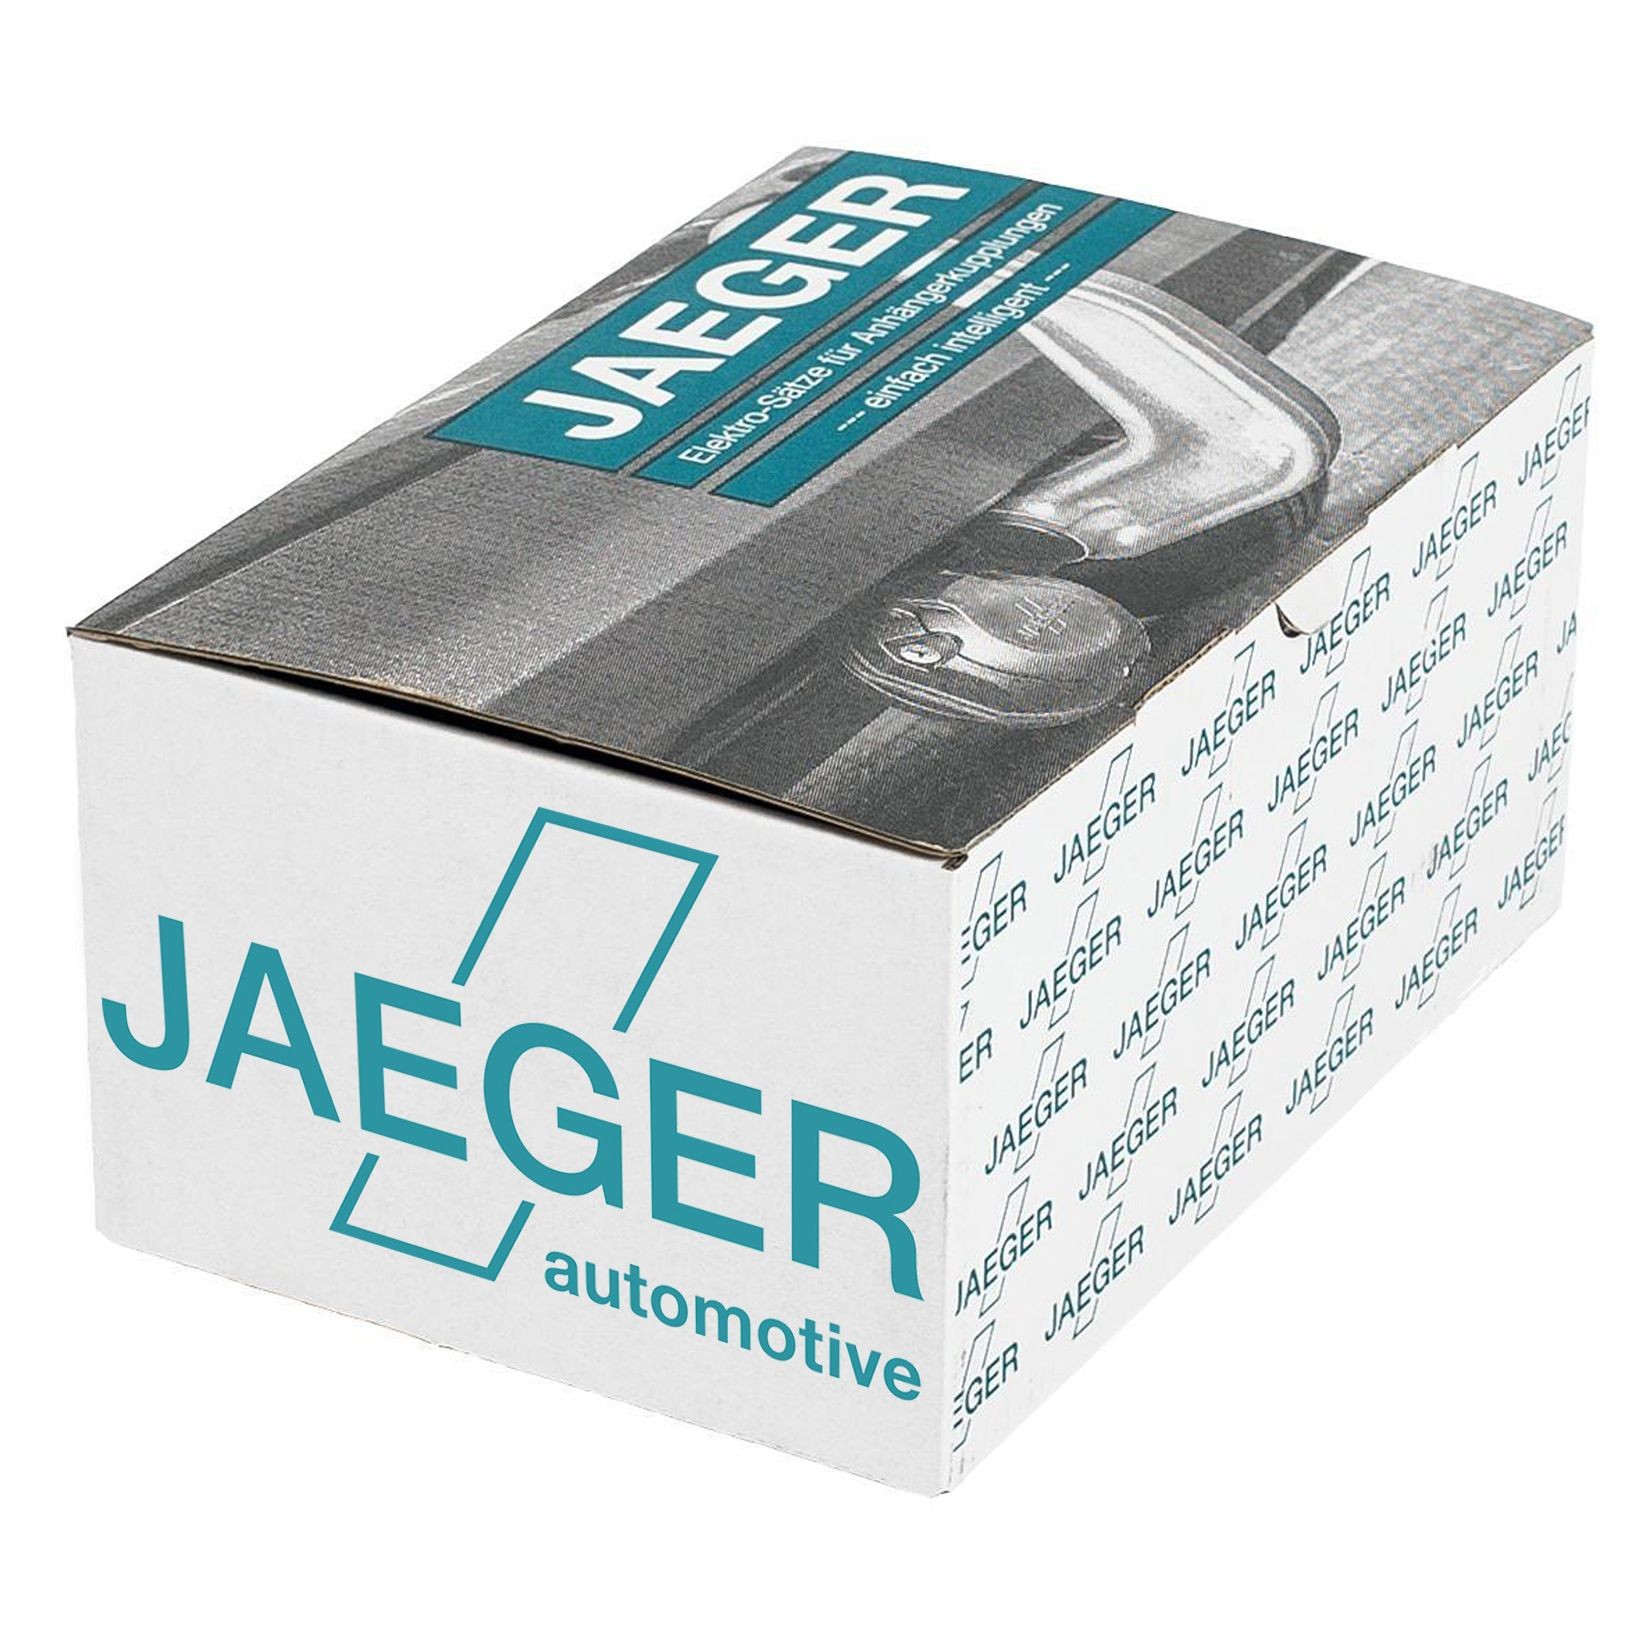 Peugeot BOXER Towbar electric kit JAEGER 21500614 cheap